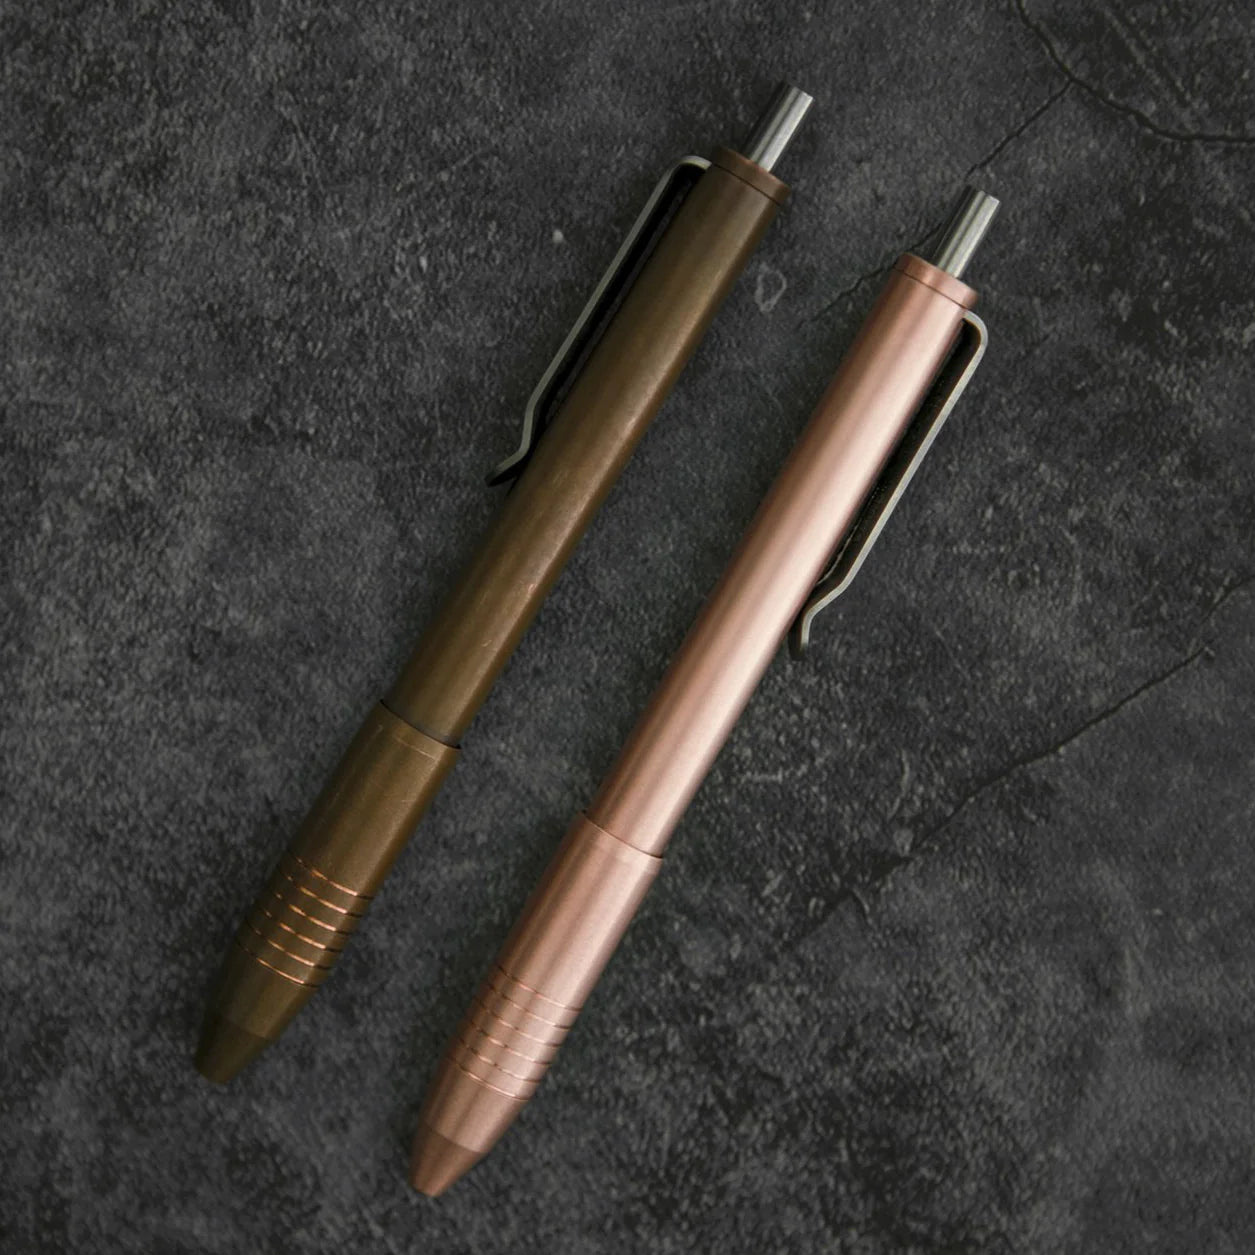 Big Idea Design - Brass & Copper Click EDC Pen